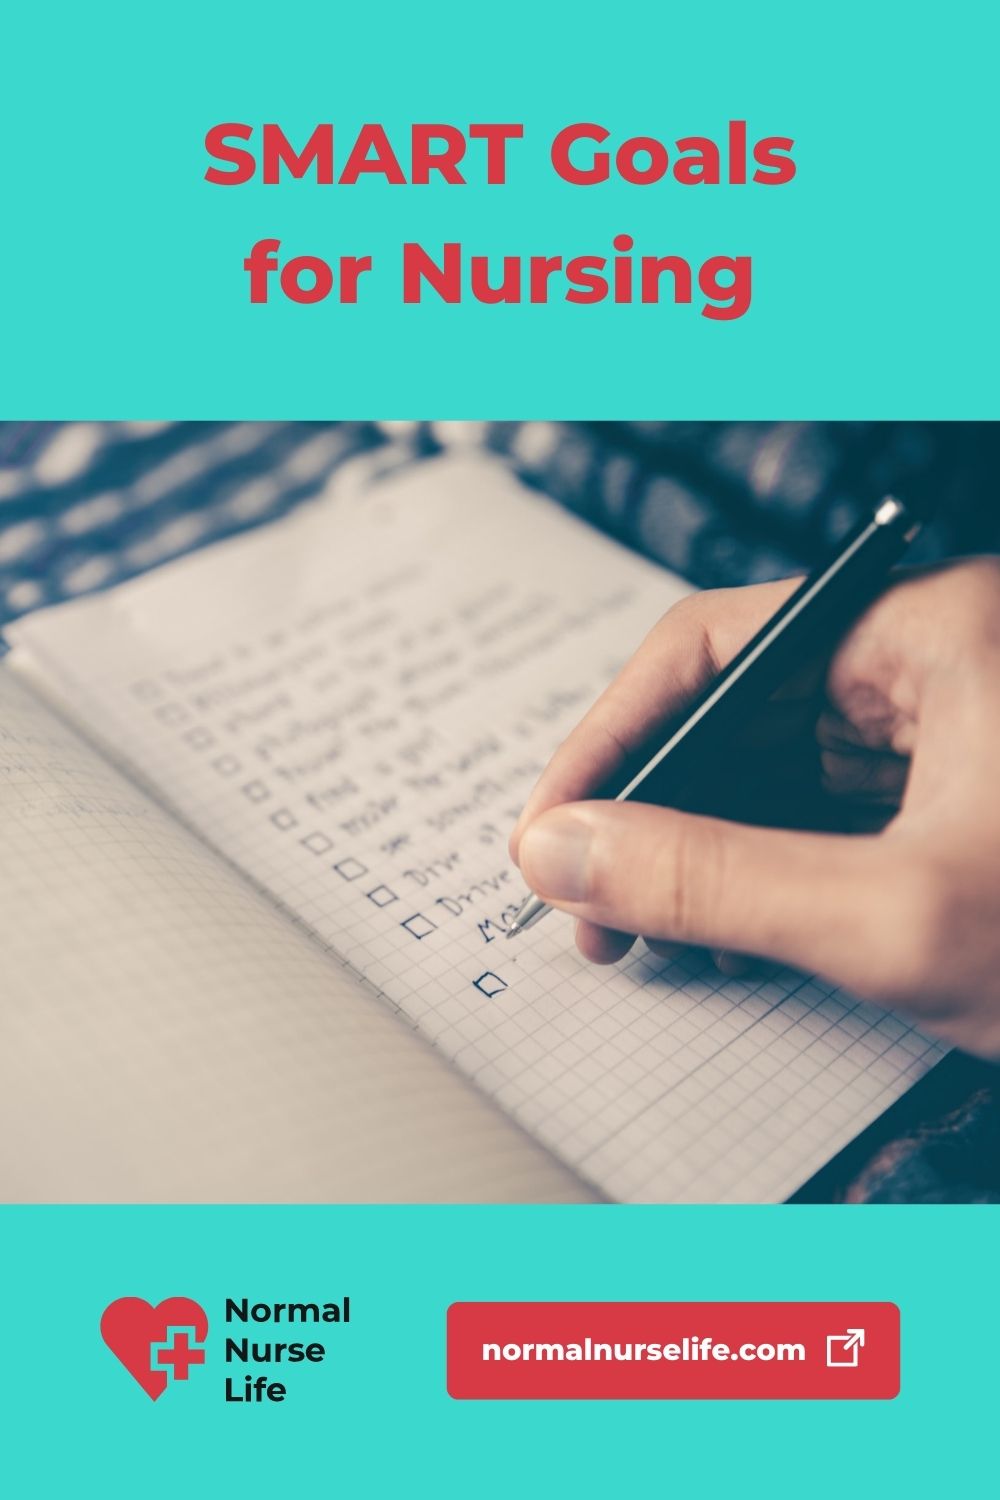 Examples of SMART goals for nursing